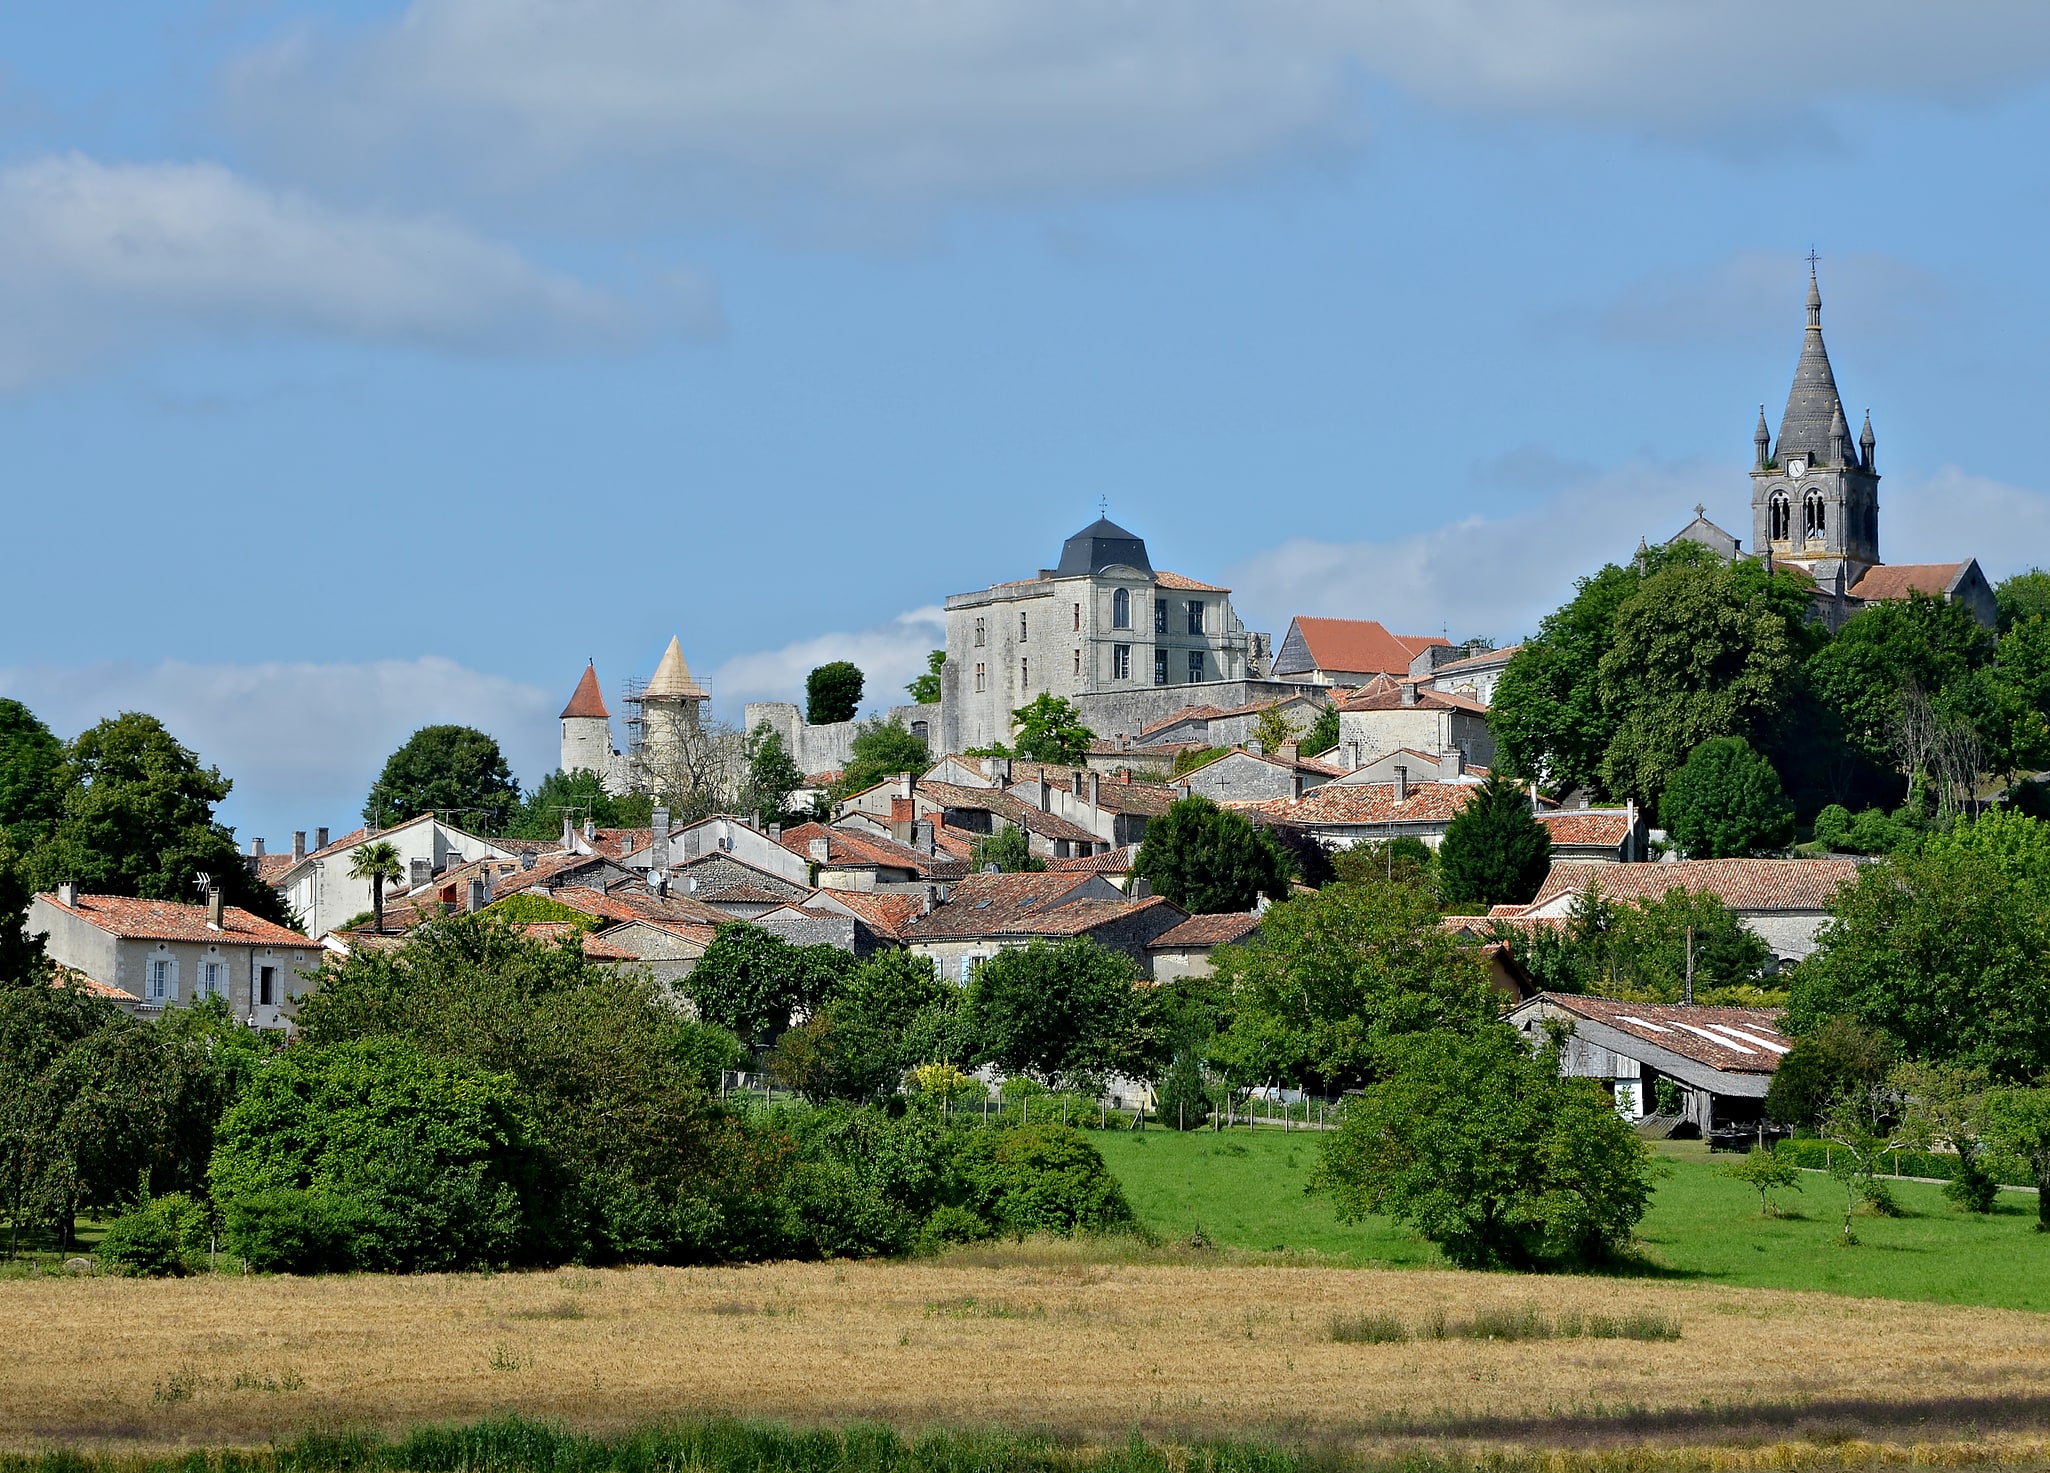 Villebois-Lavalette, France